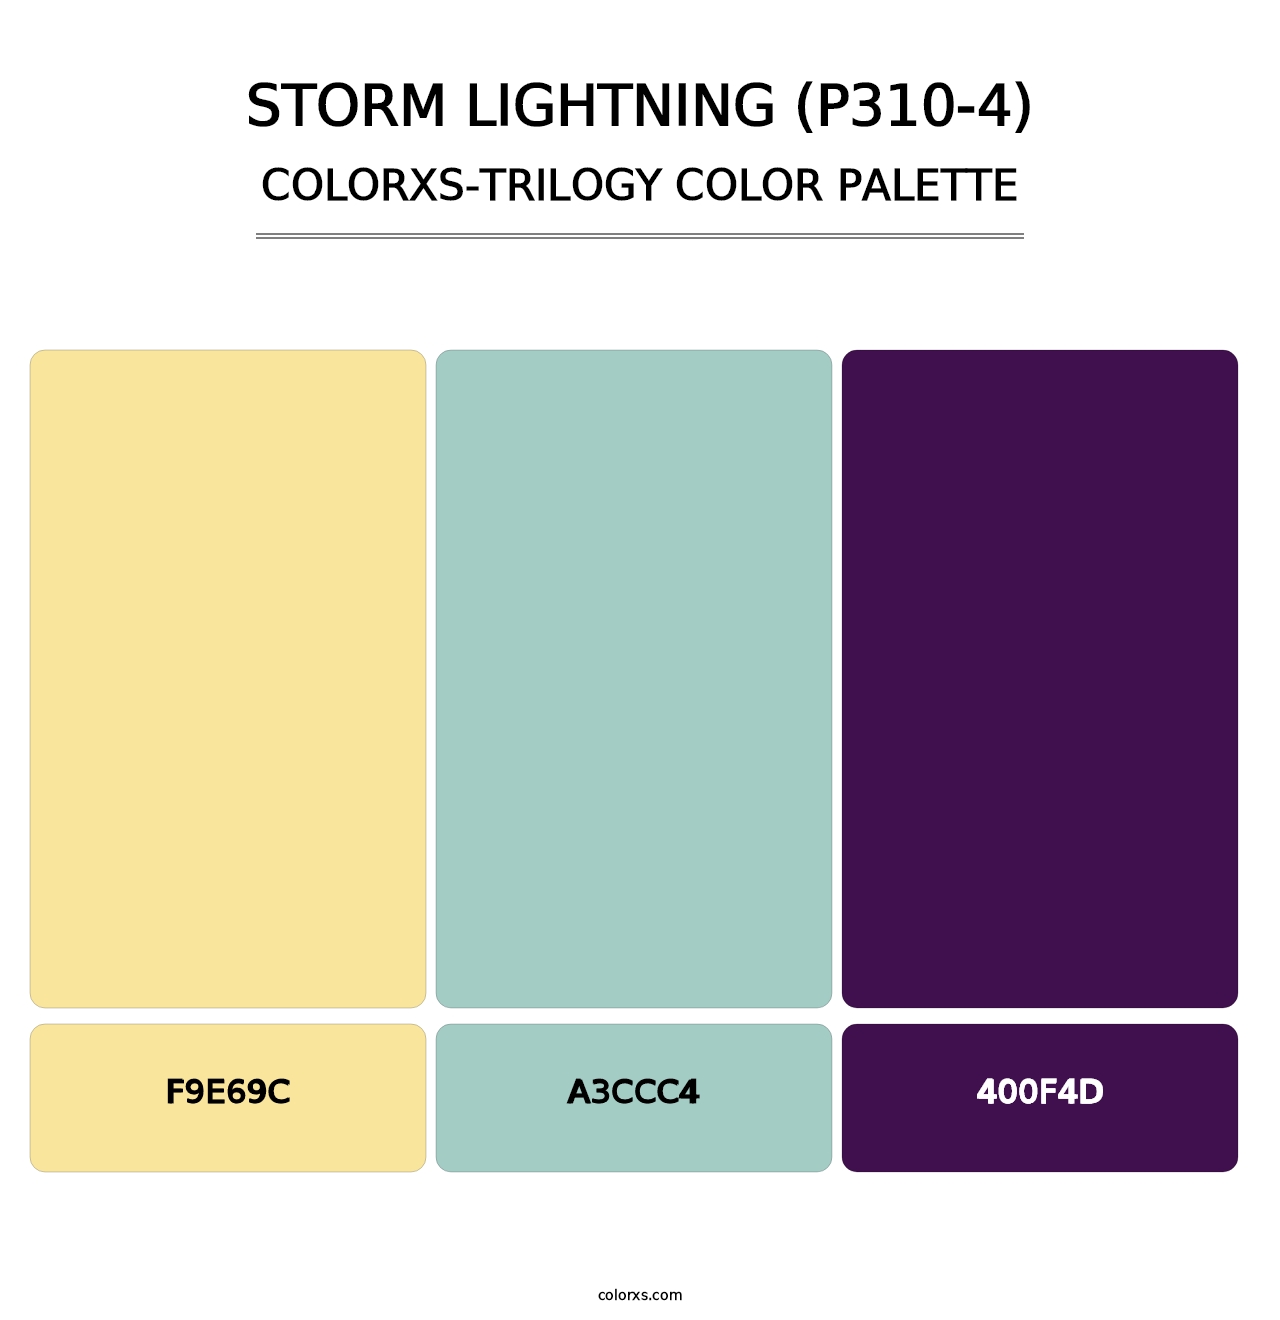 Storm Lightning (P310-4) - Colorxs Trilogy Palette